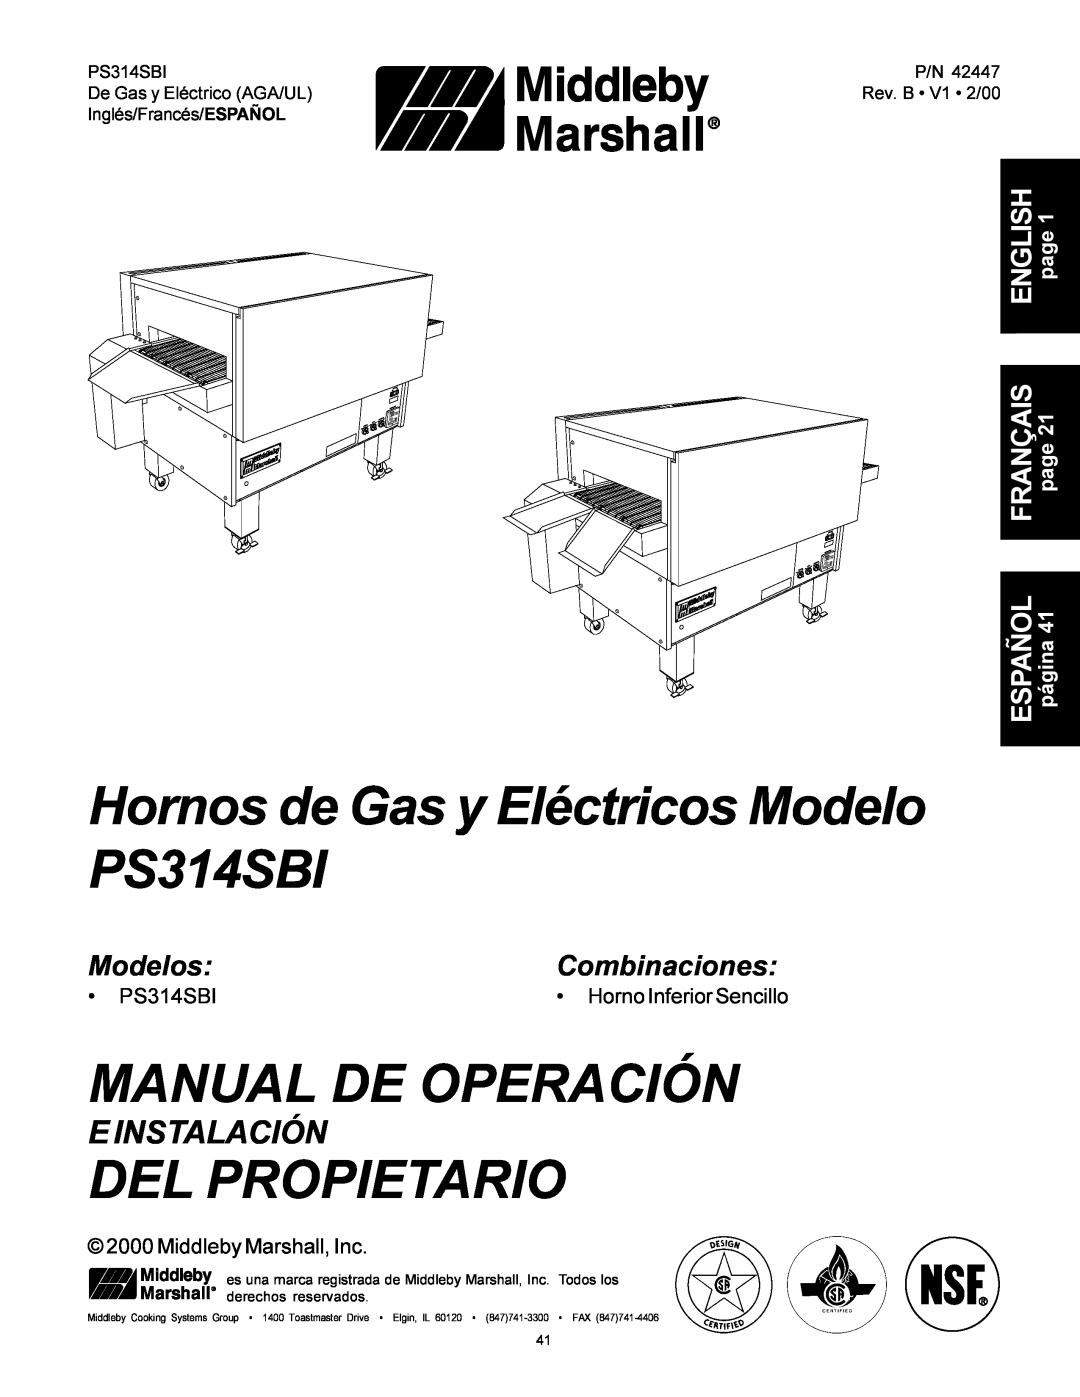 Middleby Marshall Hornos de Gas y Eléctricos Modelo PS314SBI, Manual De Operación, Del Propietario, E Instalación 